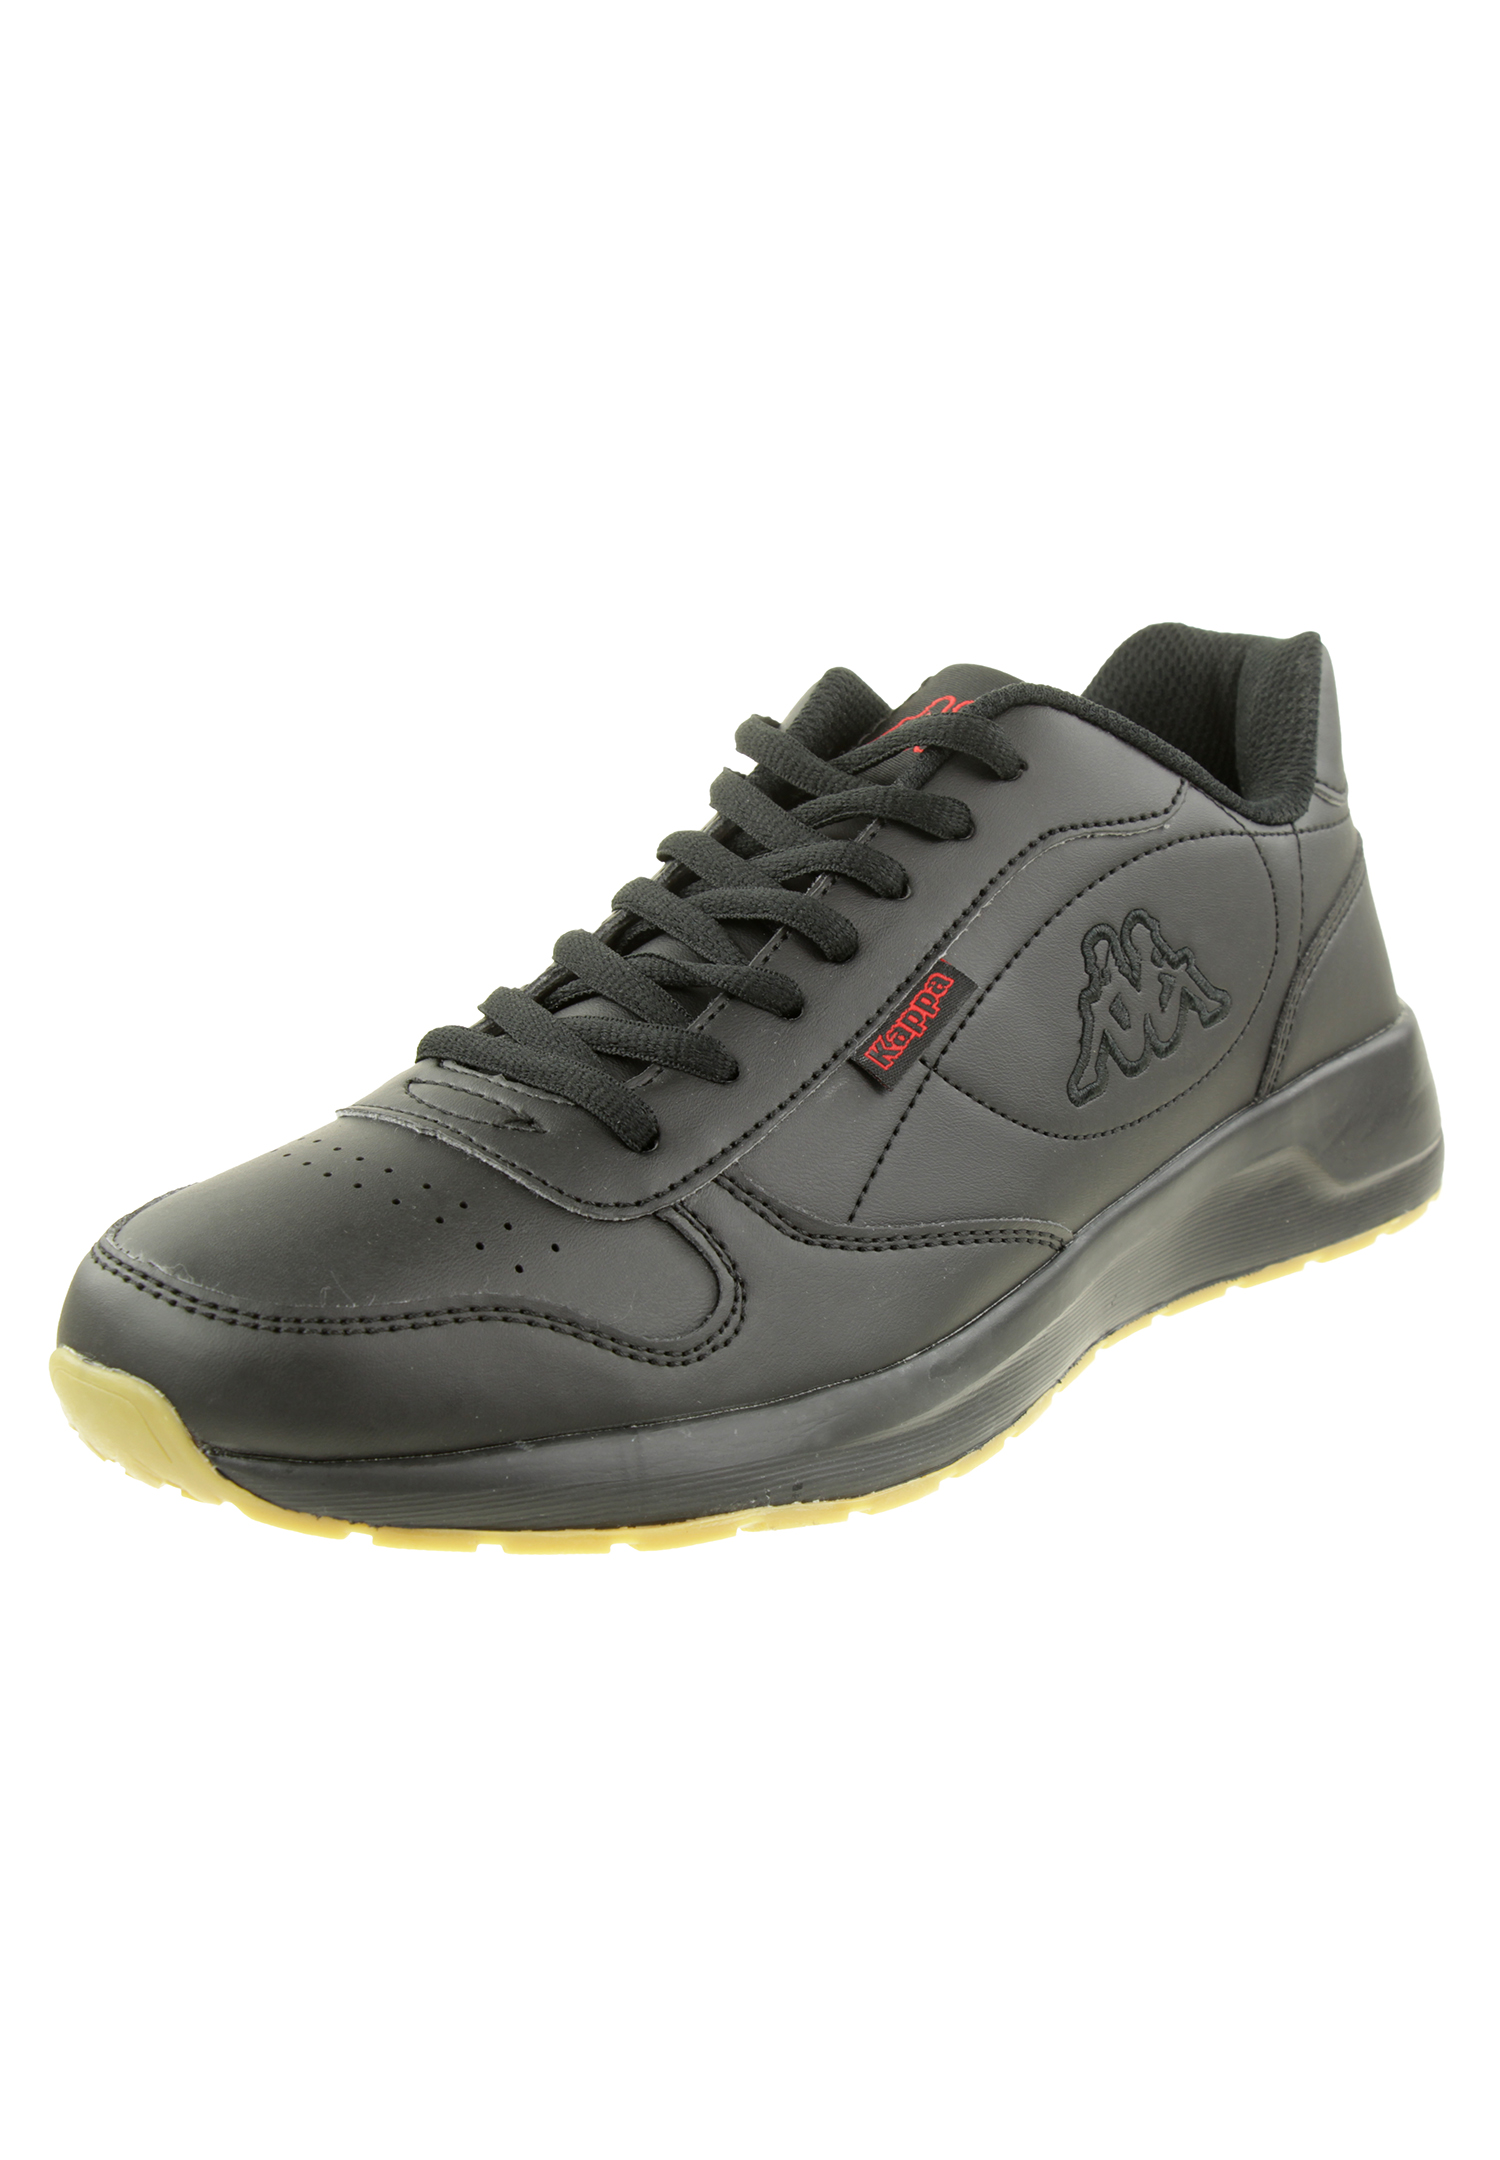 Kappa Unisex-Erwachsene Base II Sneaker, Schwarz (Black 1111), 39 EU